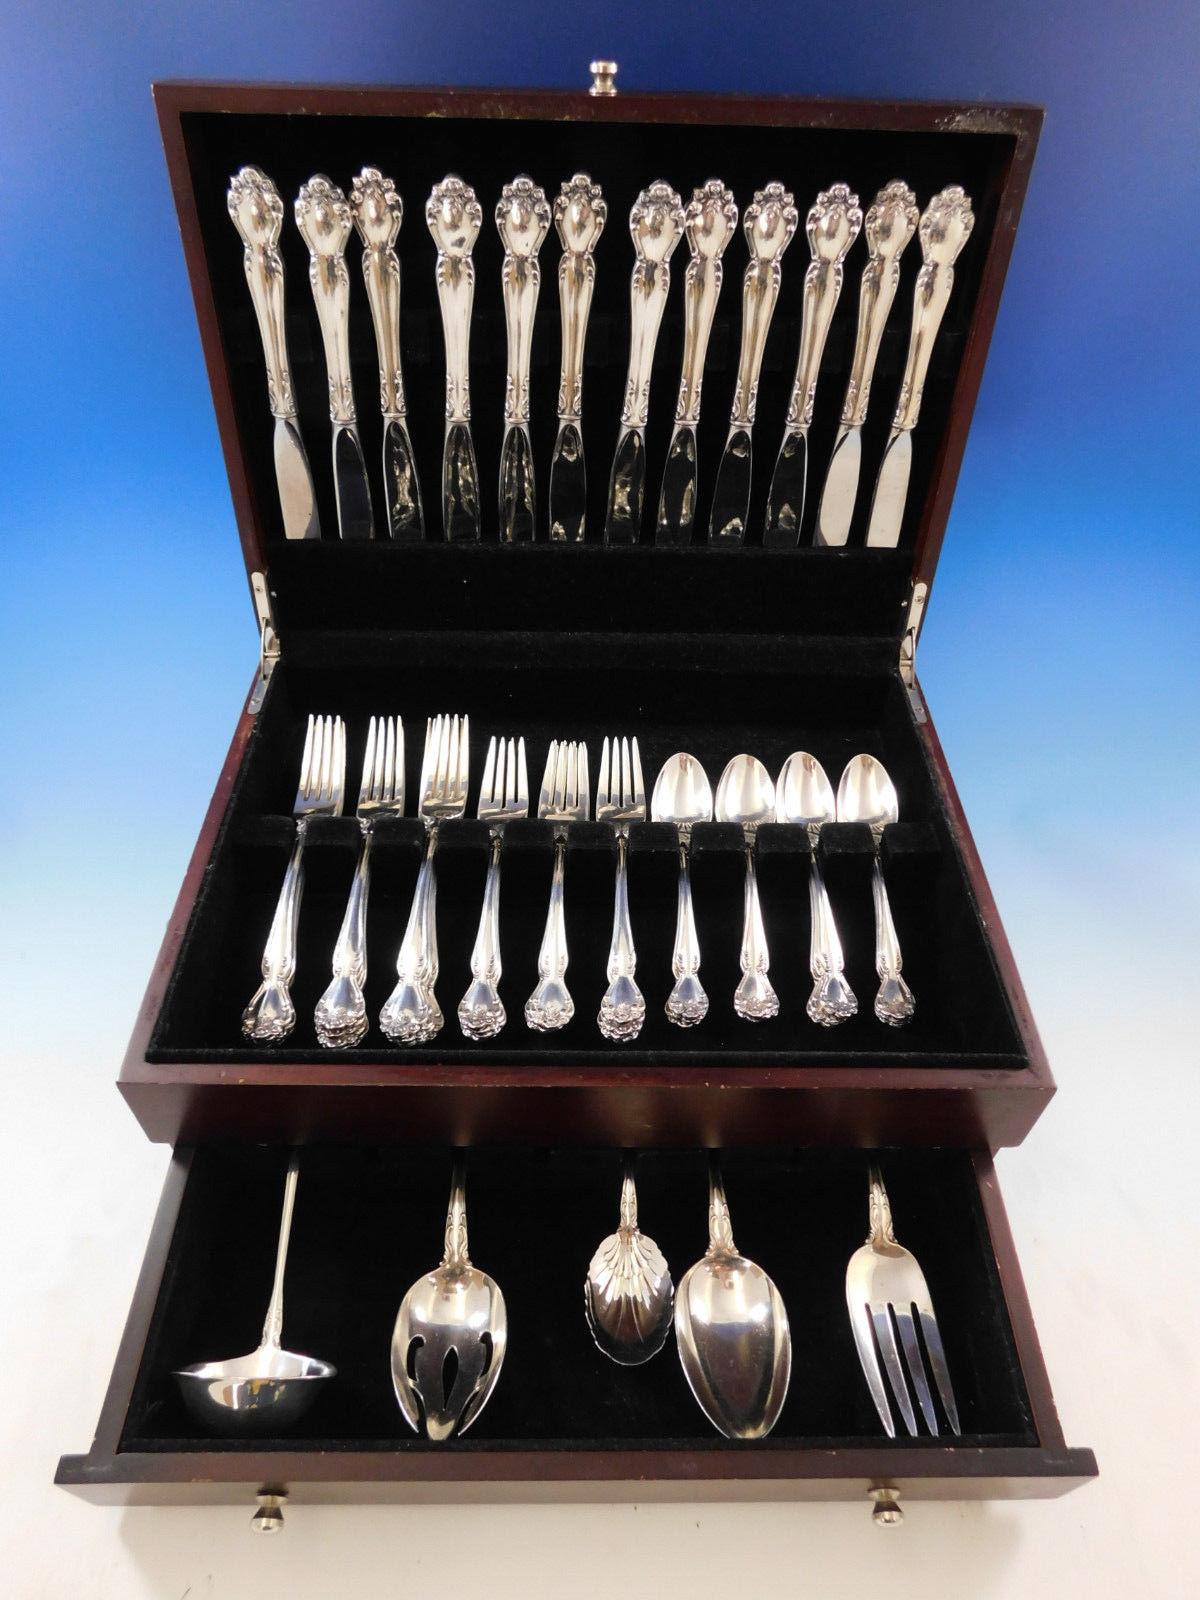 Secret garden by Gorham sterling silver flatware set, 53 pieces. This set includes:

12 knives, 9 1/4